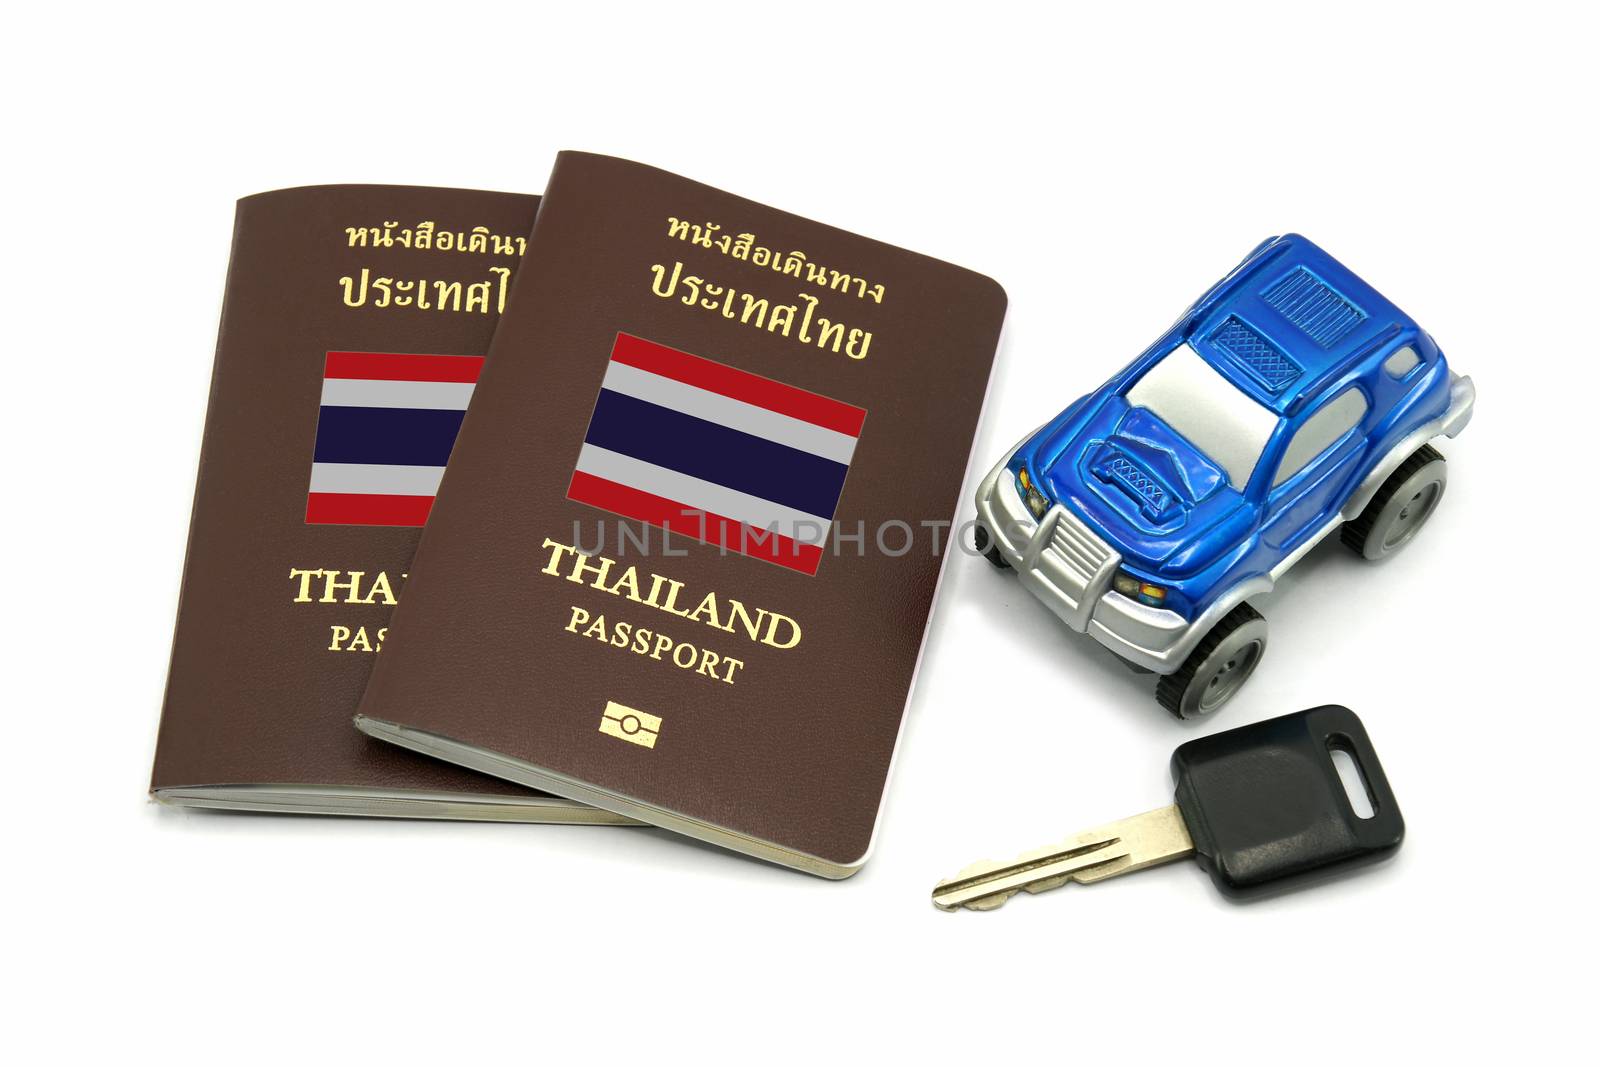 Thailand Passport, Car Key and Car Model for Travel or A.E.C. concept